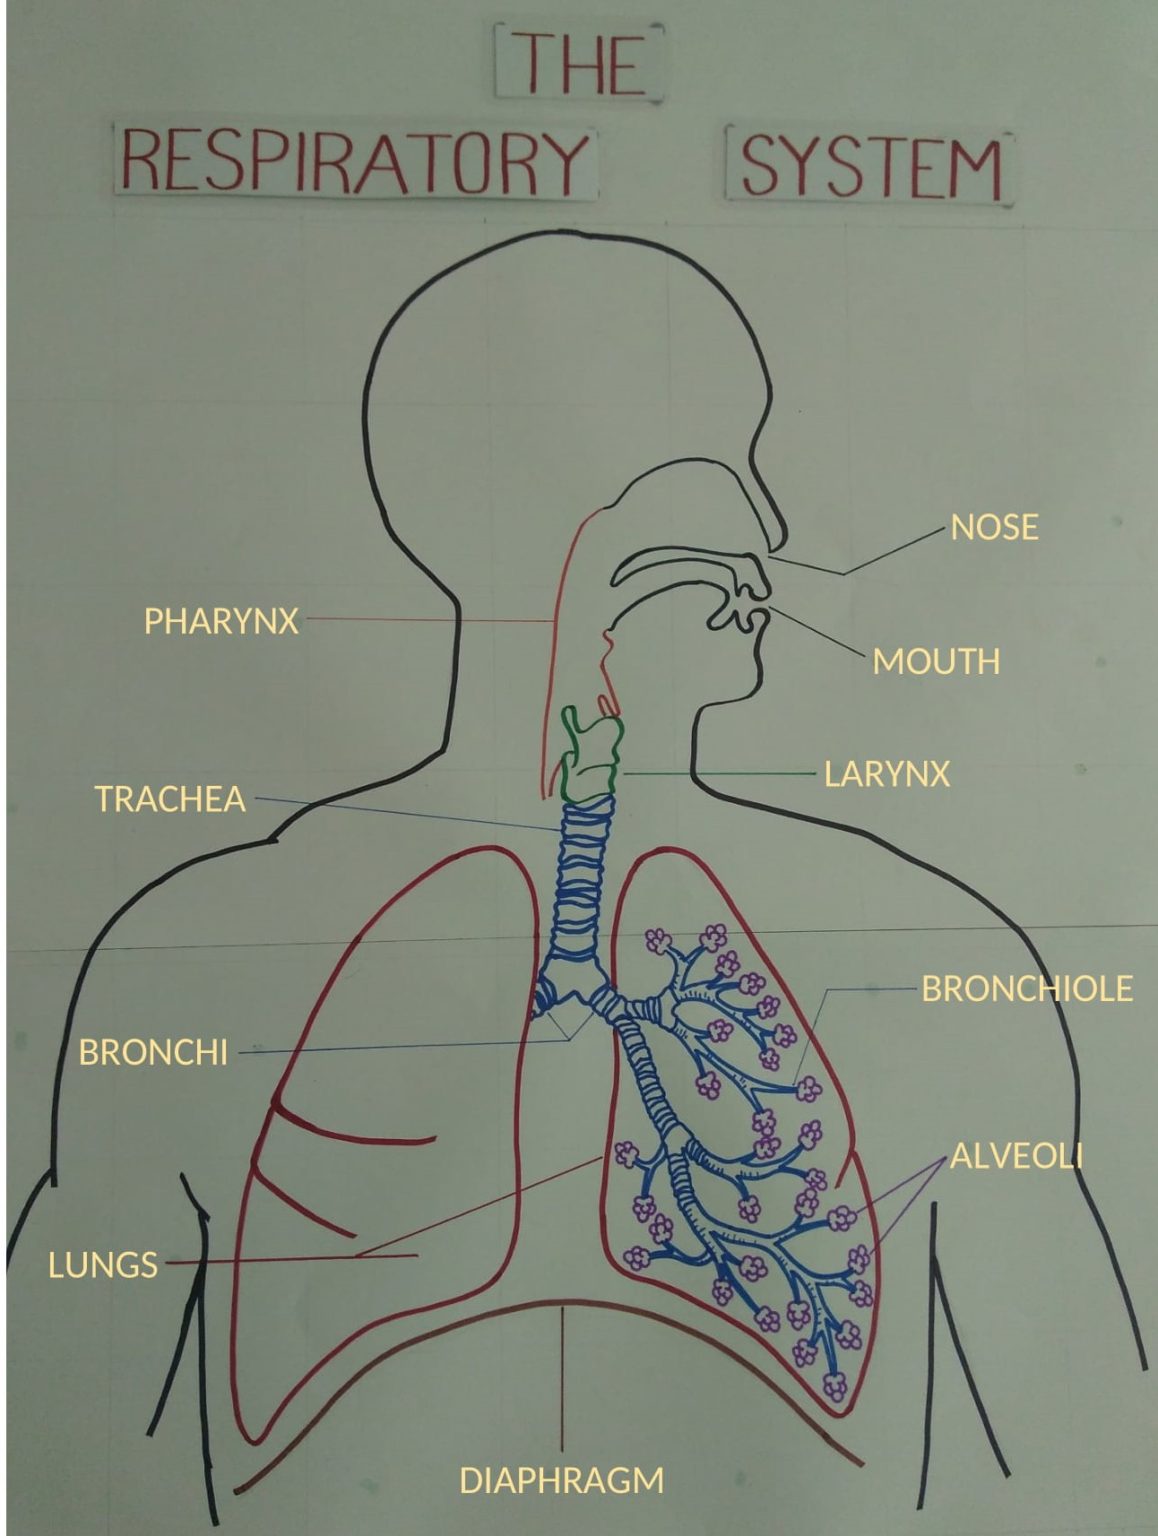 Respiratory System Diagram Final 1158x1536 